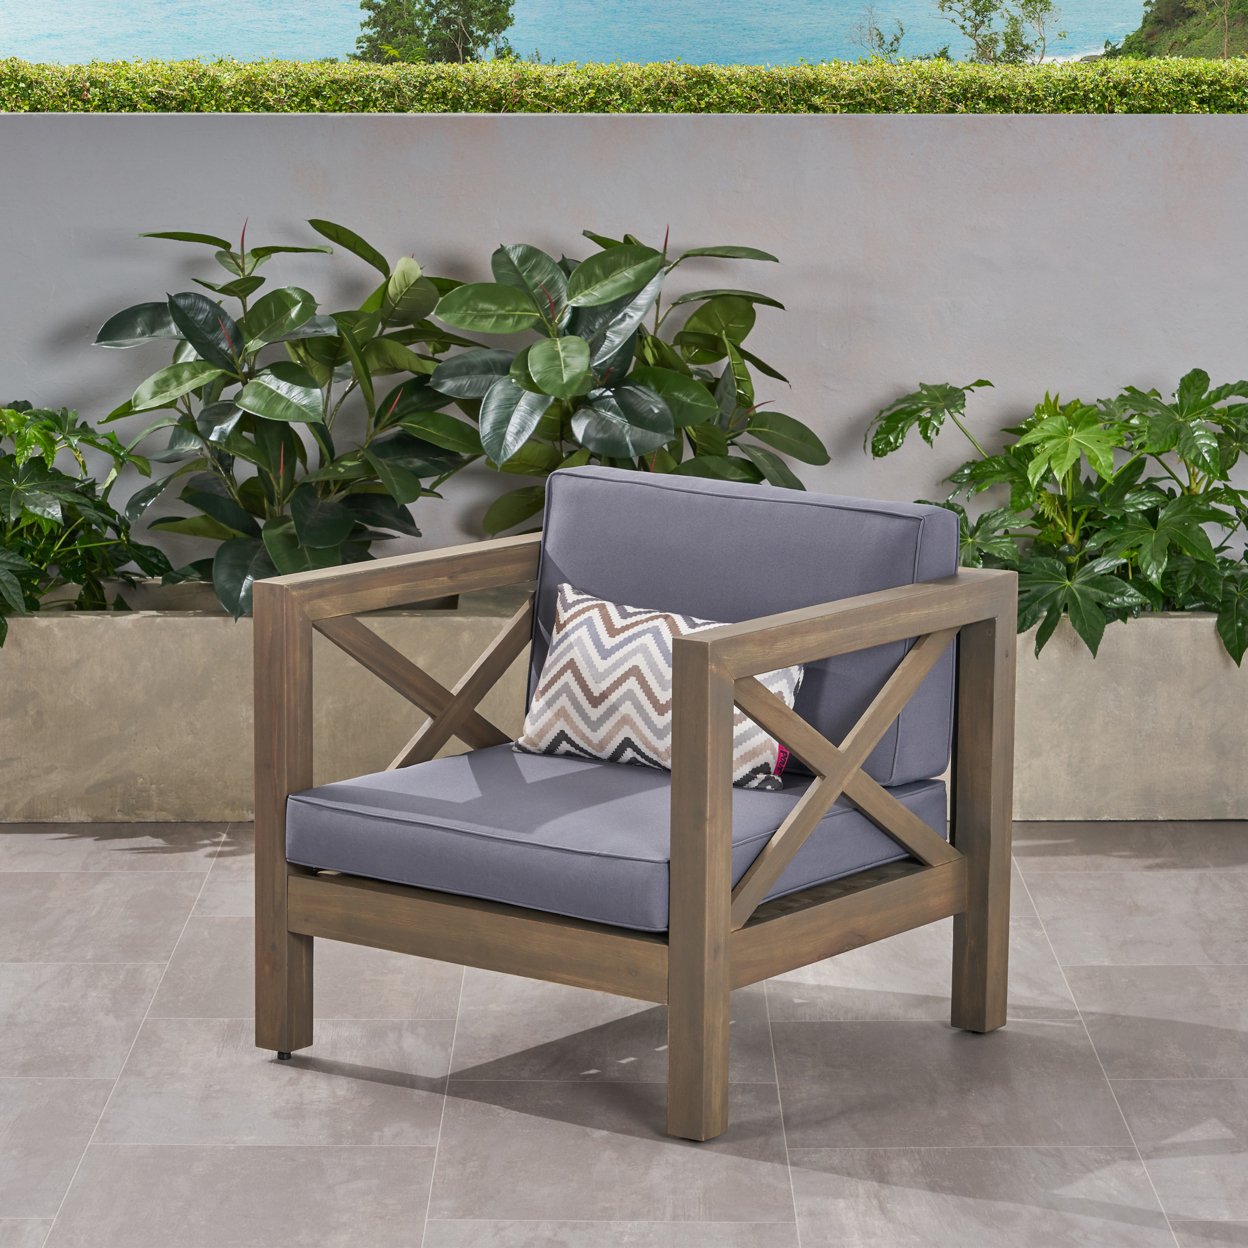 Indira Outdoor Acacia Wood Club Chair With Cushion - Teak Finish + Beige